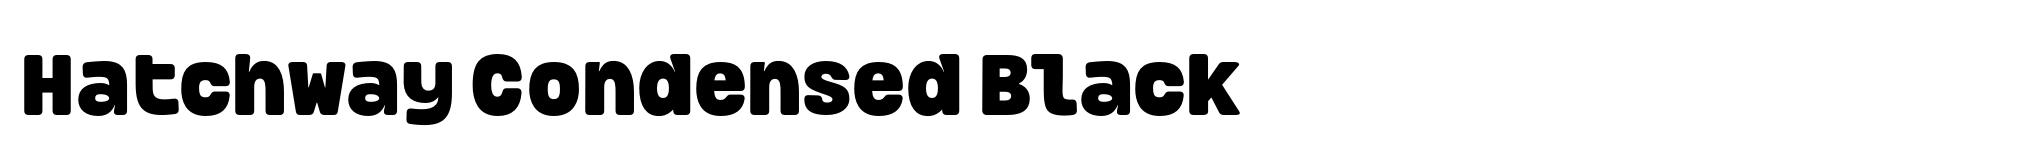 Hatchway Condensed Black image